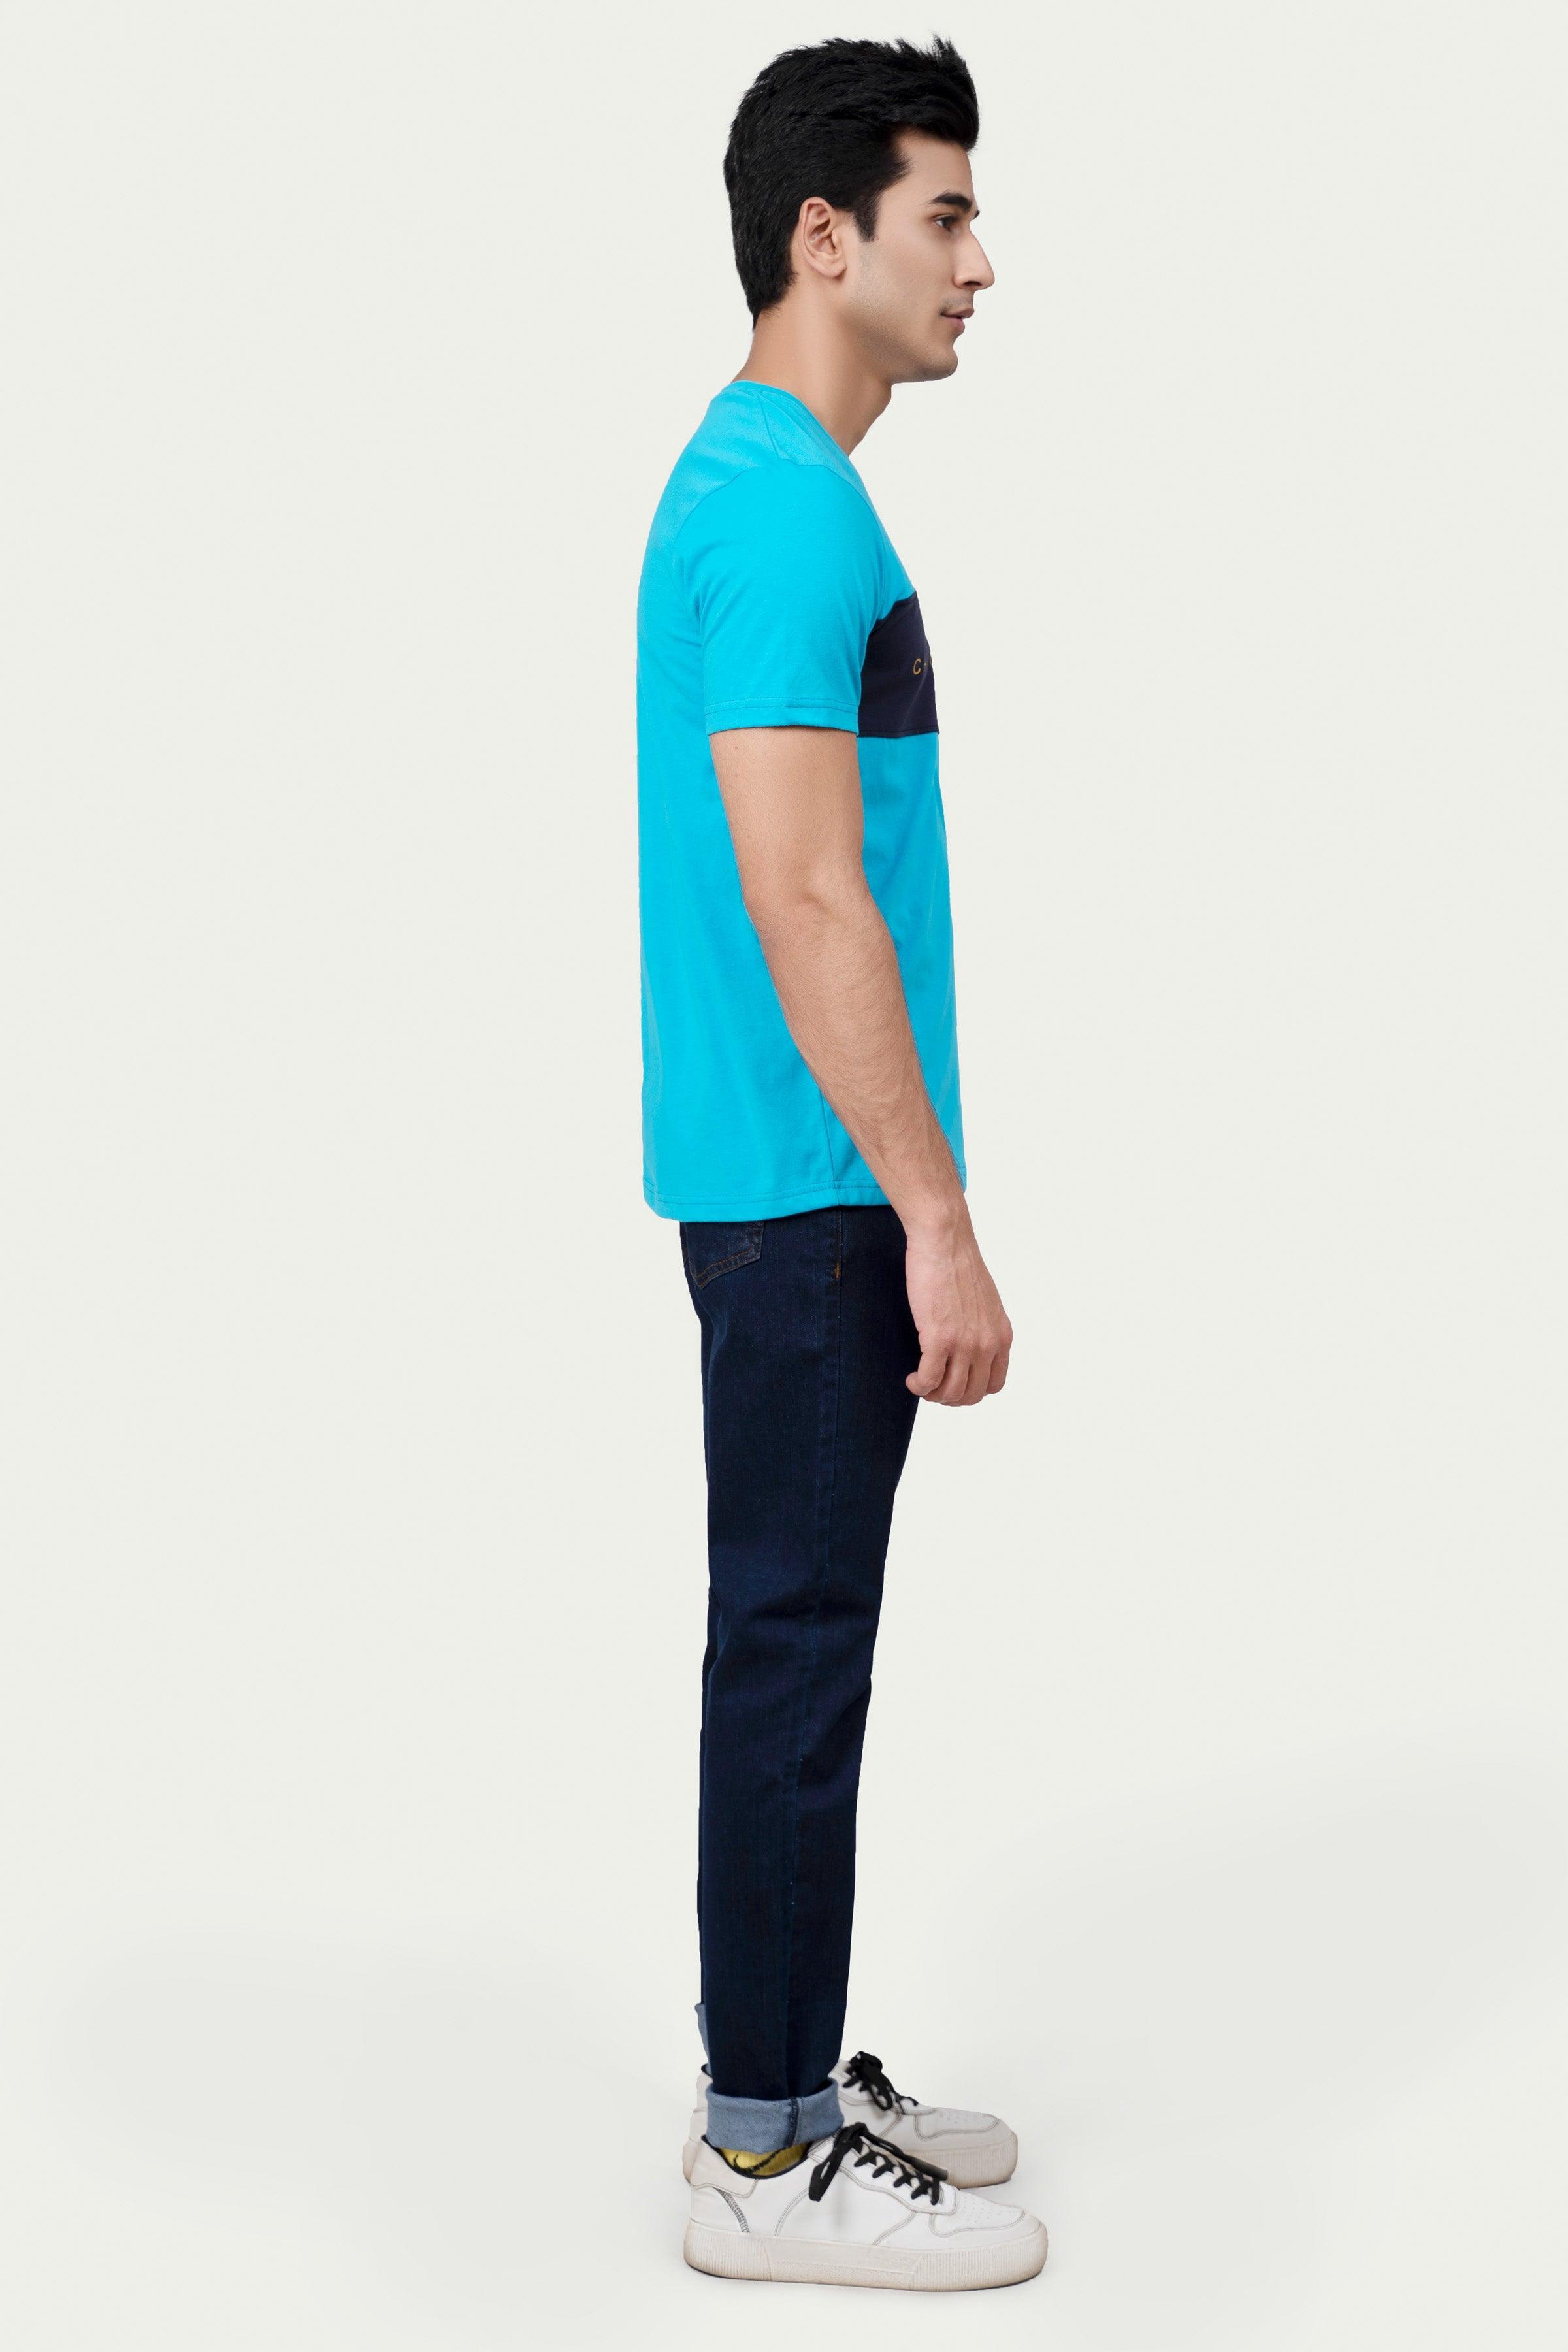 CUT & SEW PANEL T-SHIRT BLUE at Charcoal Clothing